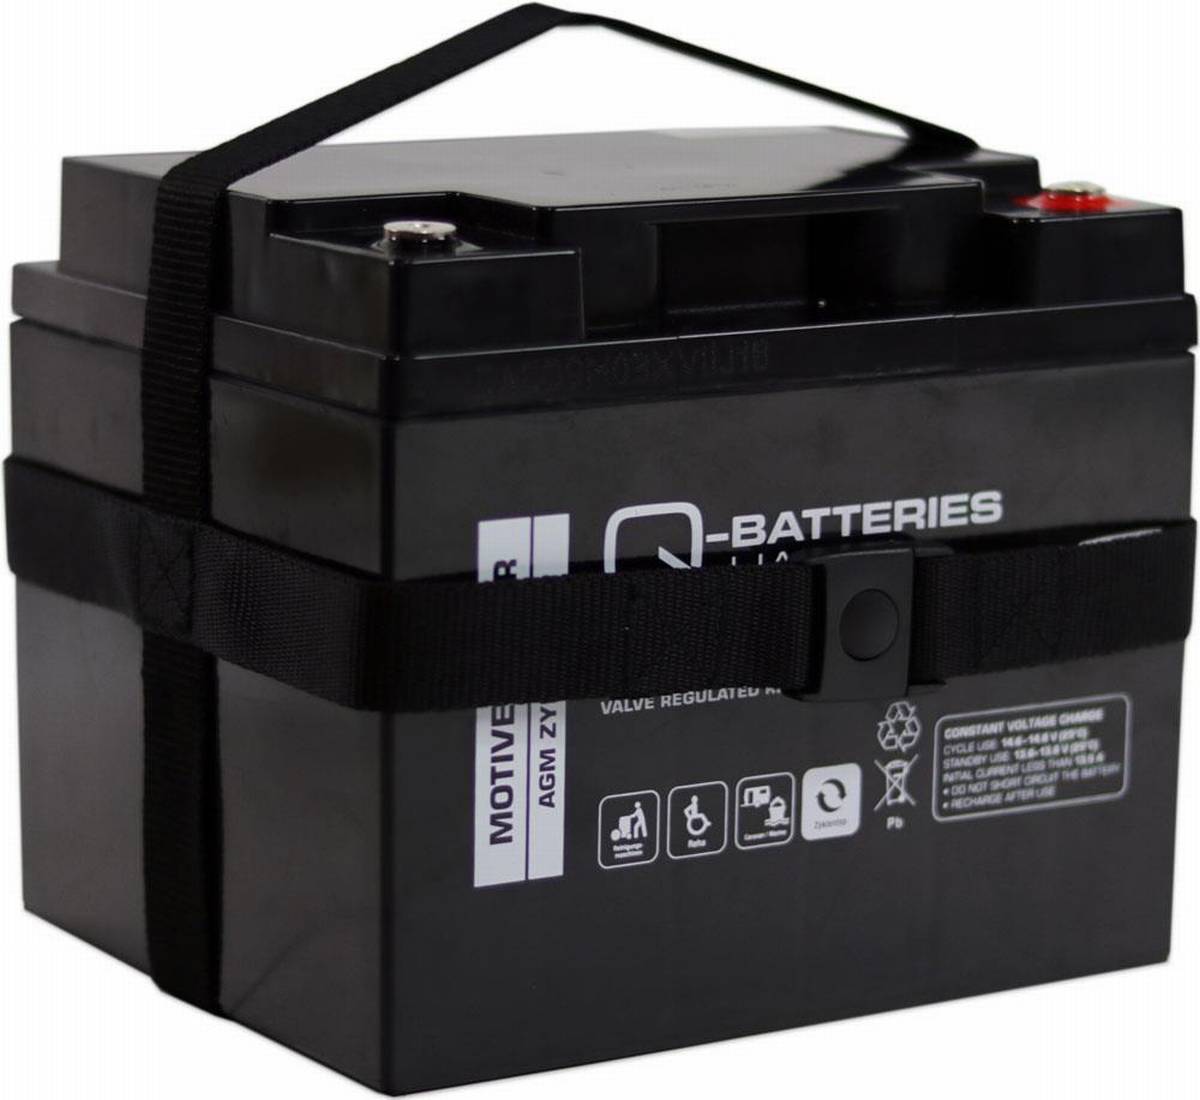 Q-Batteries 12LC-75 12V 77Ah AGM Lead Battery con cinghia di trasporto